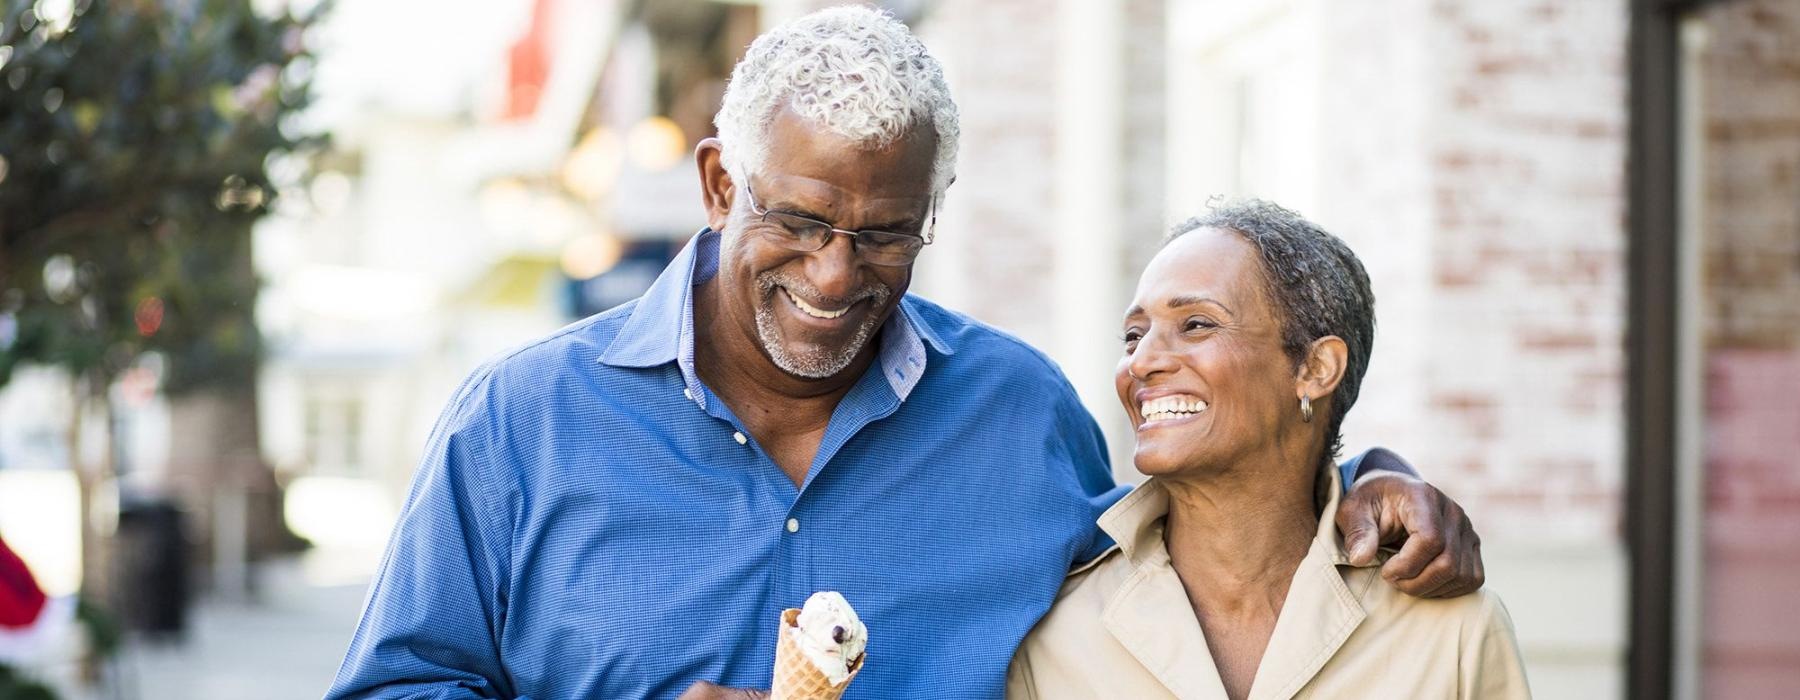 older couple walks down city sidewalk while holding ice cream cones